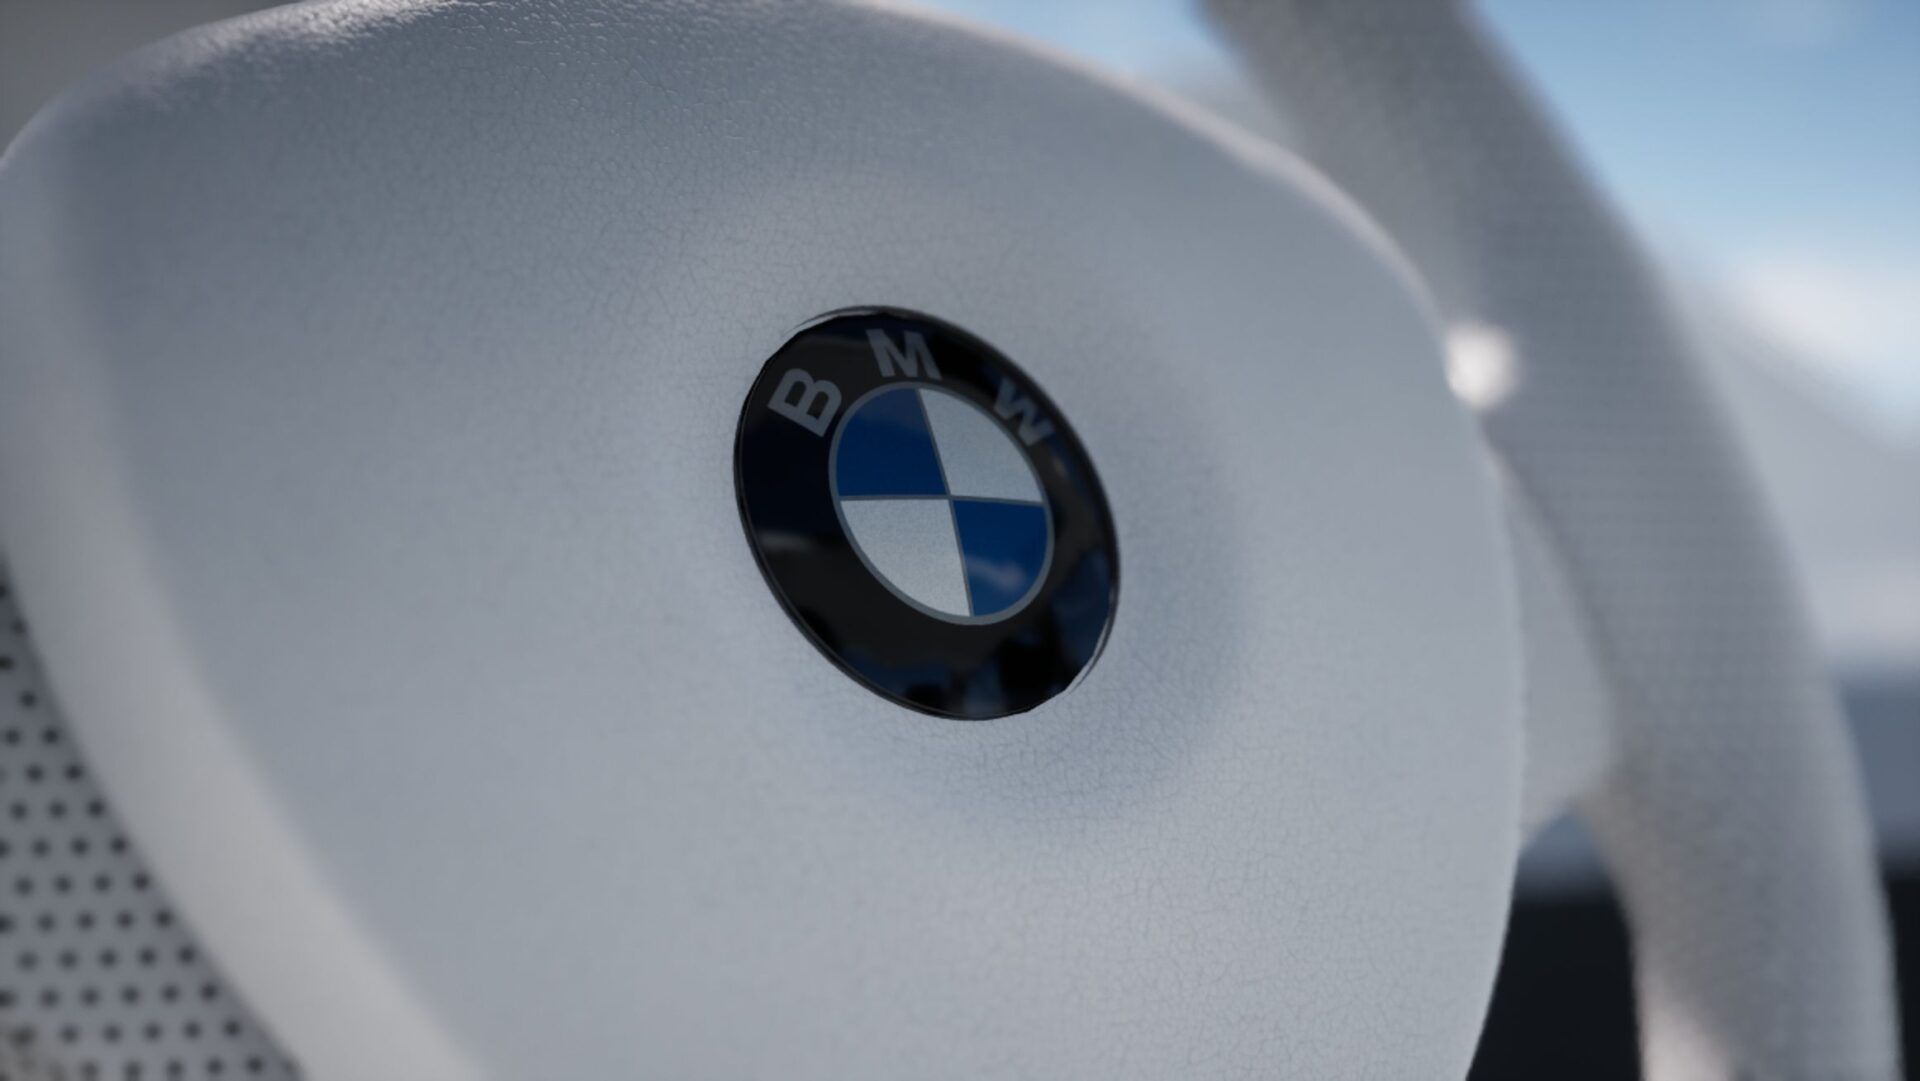 BMW 330i interior detail